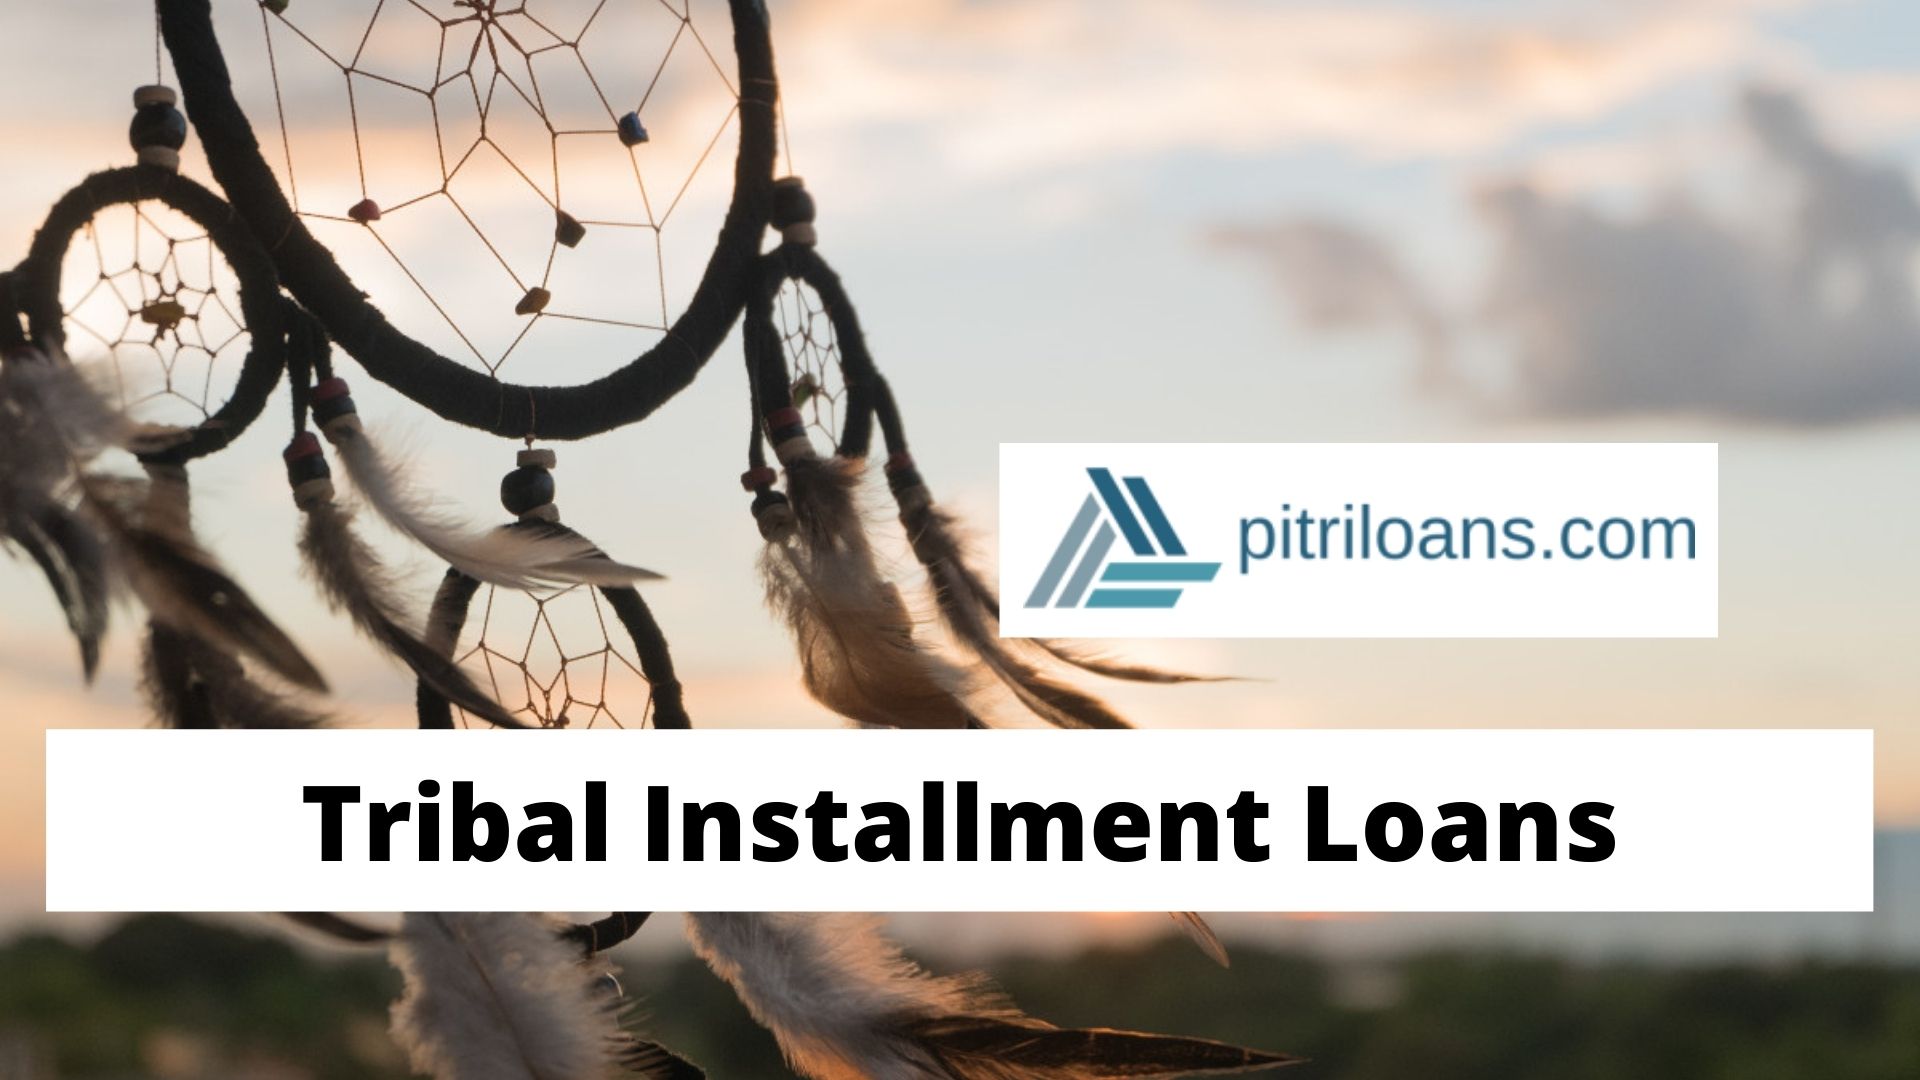 Tribal Installment Loans direct lender no credit check